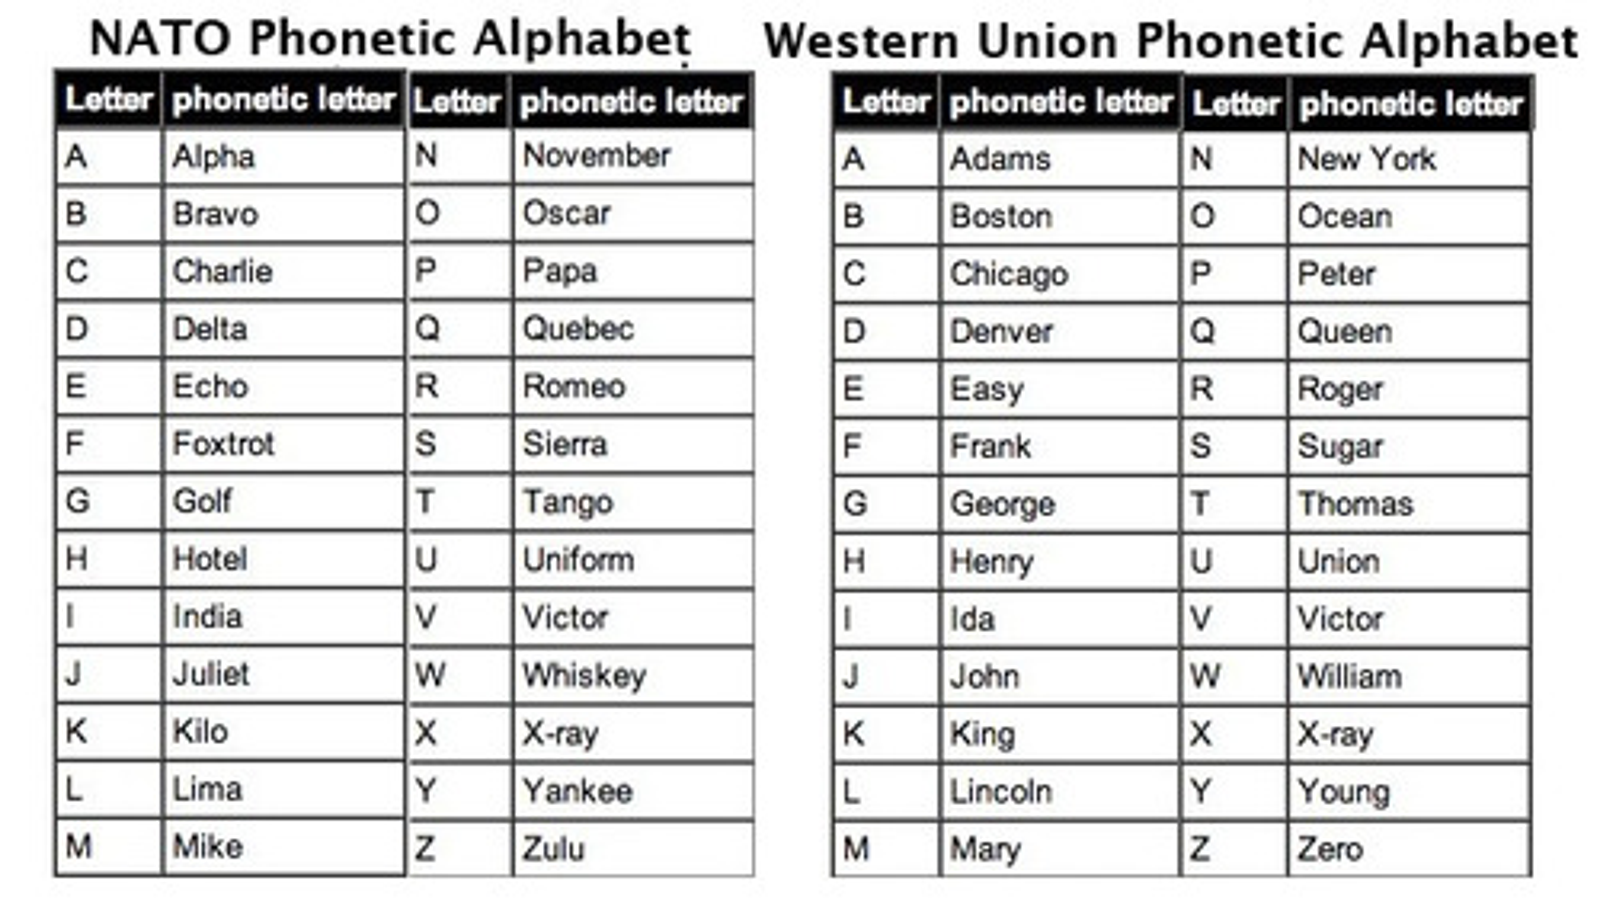 english alphabet spelling on the phone